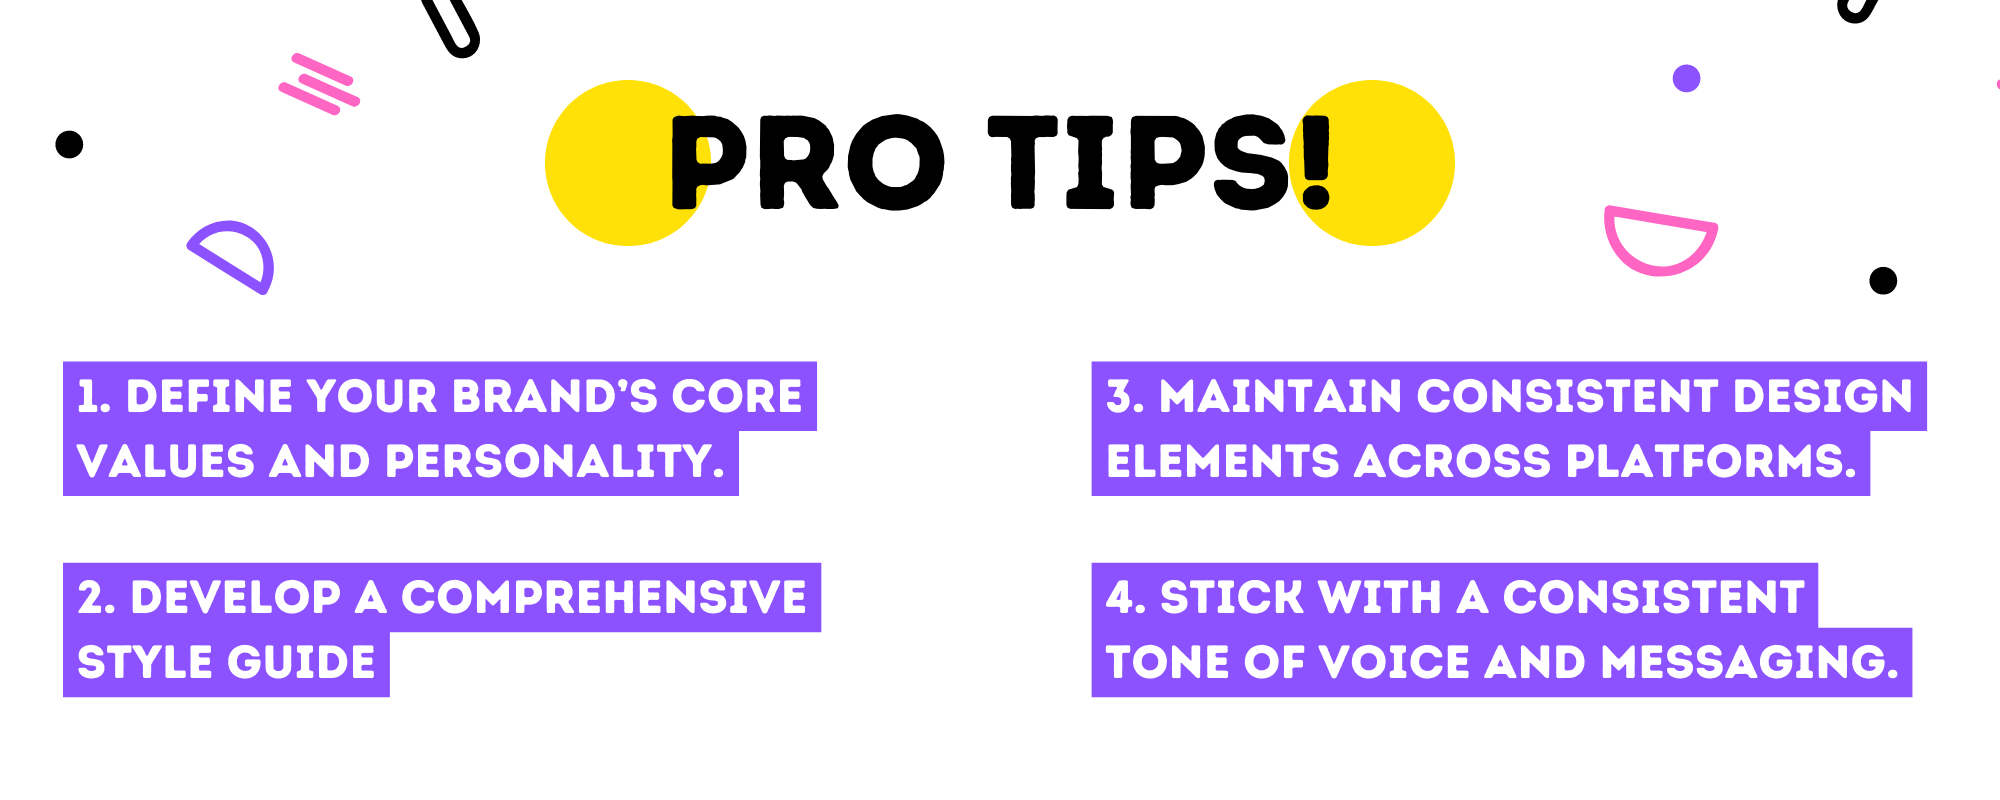 Pro tips